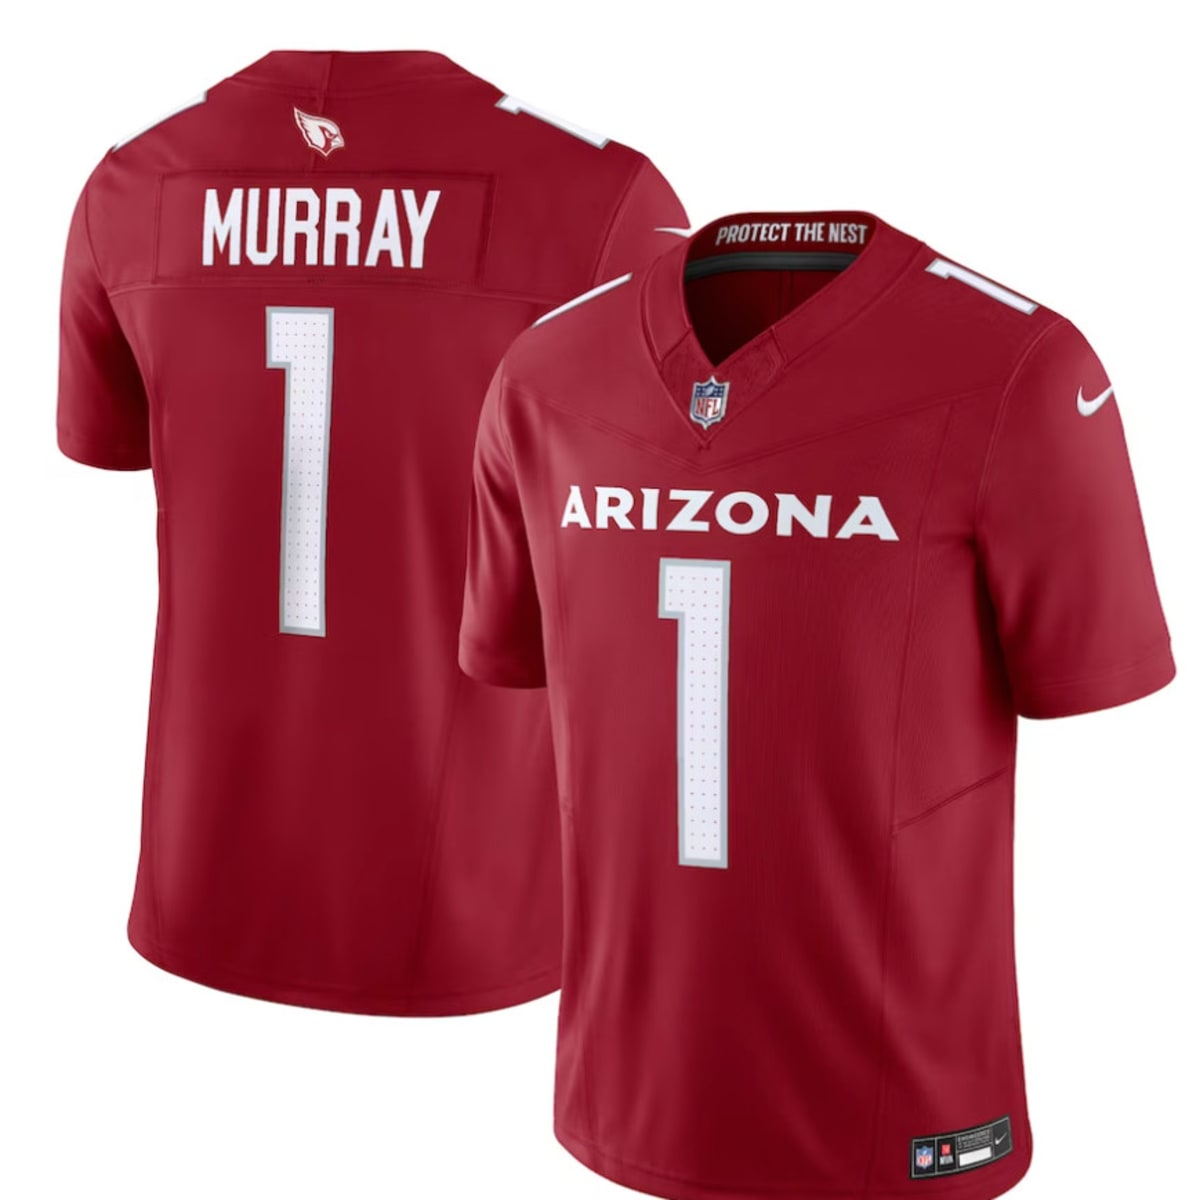 Arizona Cardinals Home Uniform - National Football League (NFL